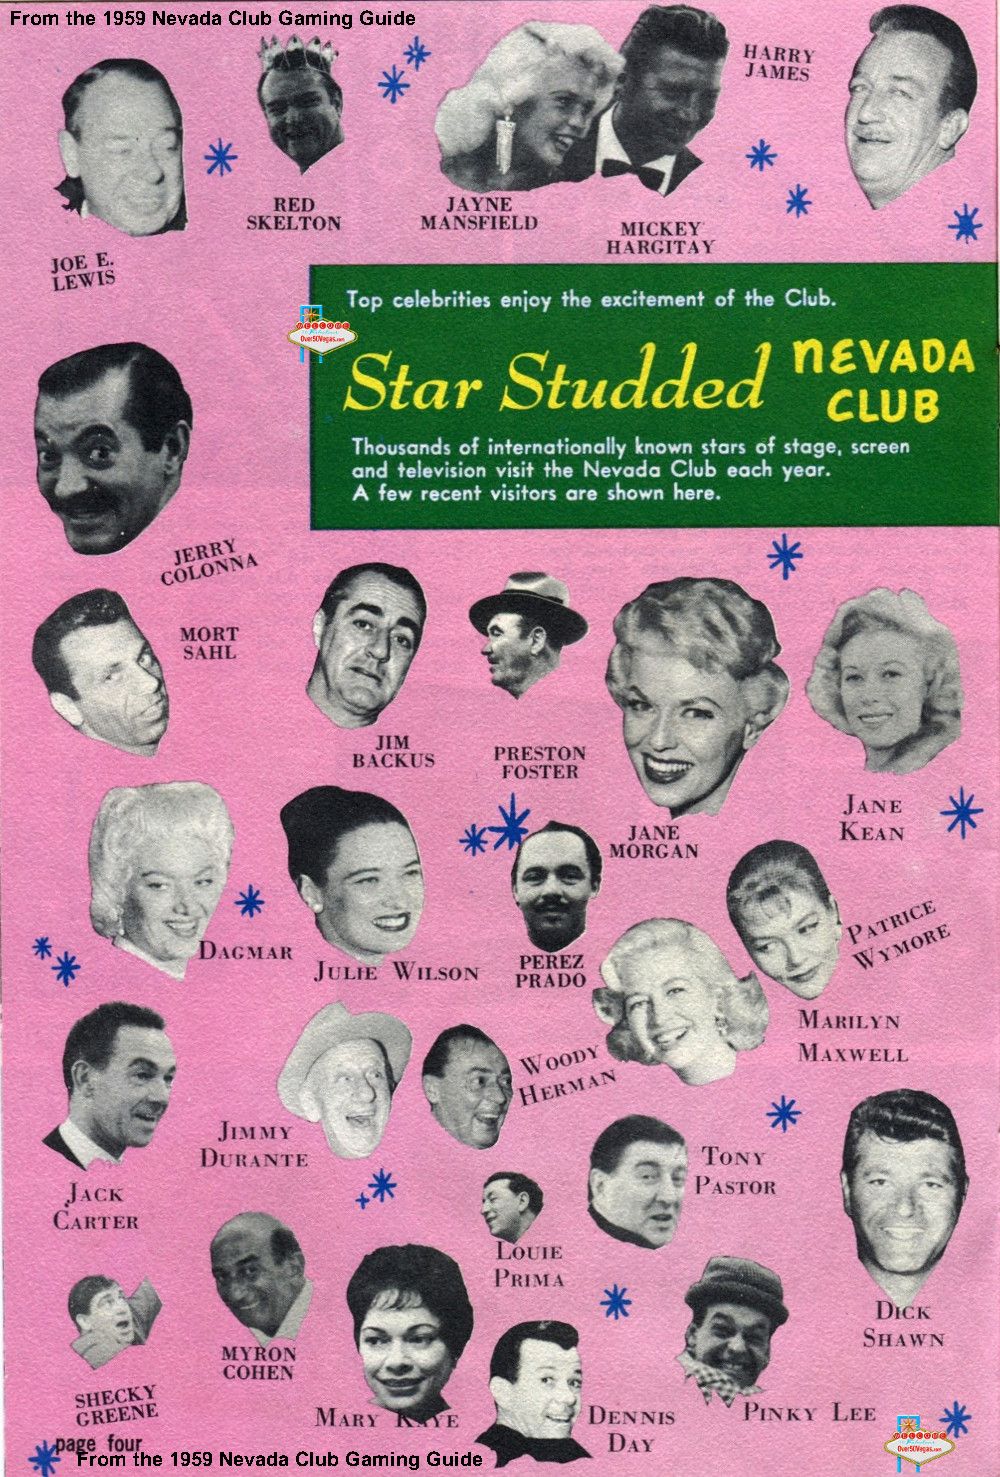 Nevada Club 1959 Gaming Guide advertising